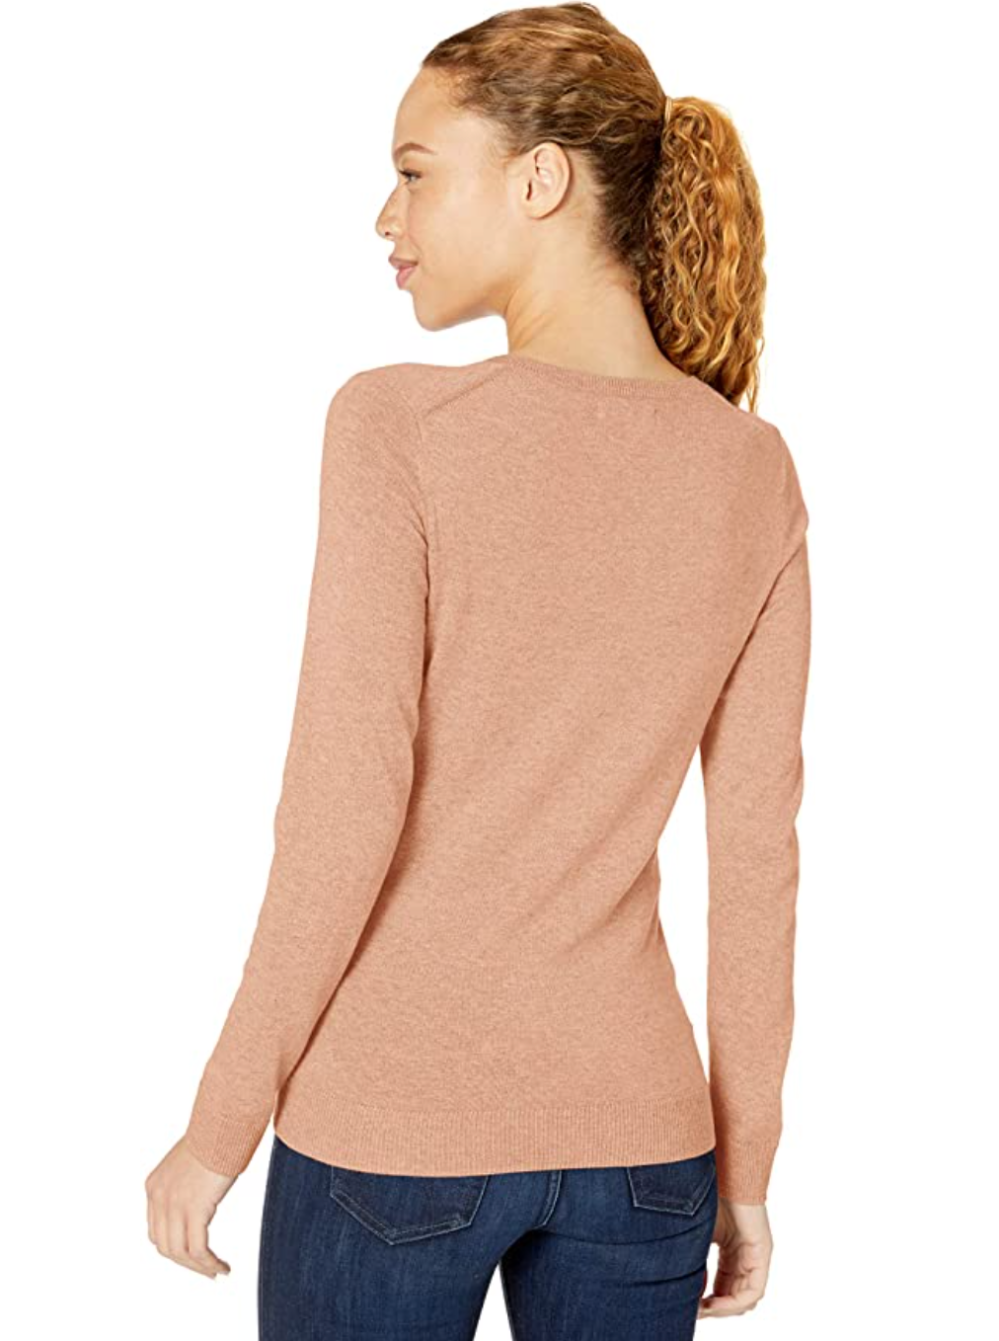 Amazon Essentials Women's Classic Fit Lightweight Long-Sleeve V-Neck Sweater